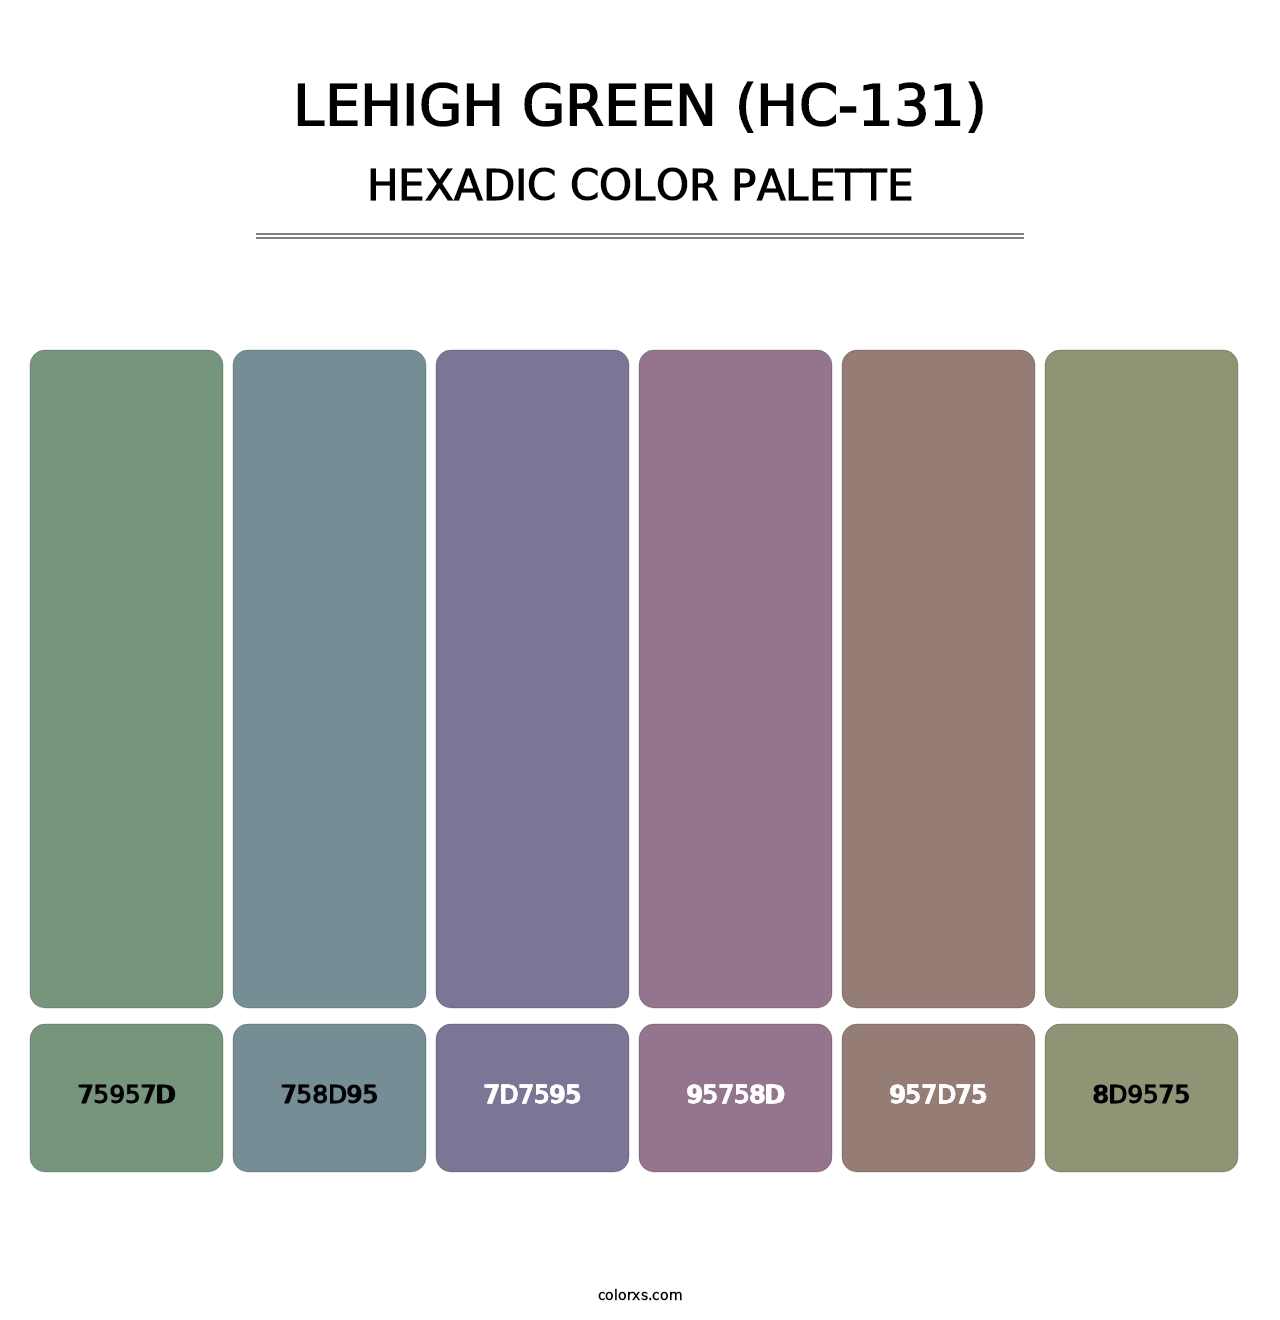 Lehigh Green (HC-131) - Hexadic Color Palette